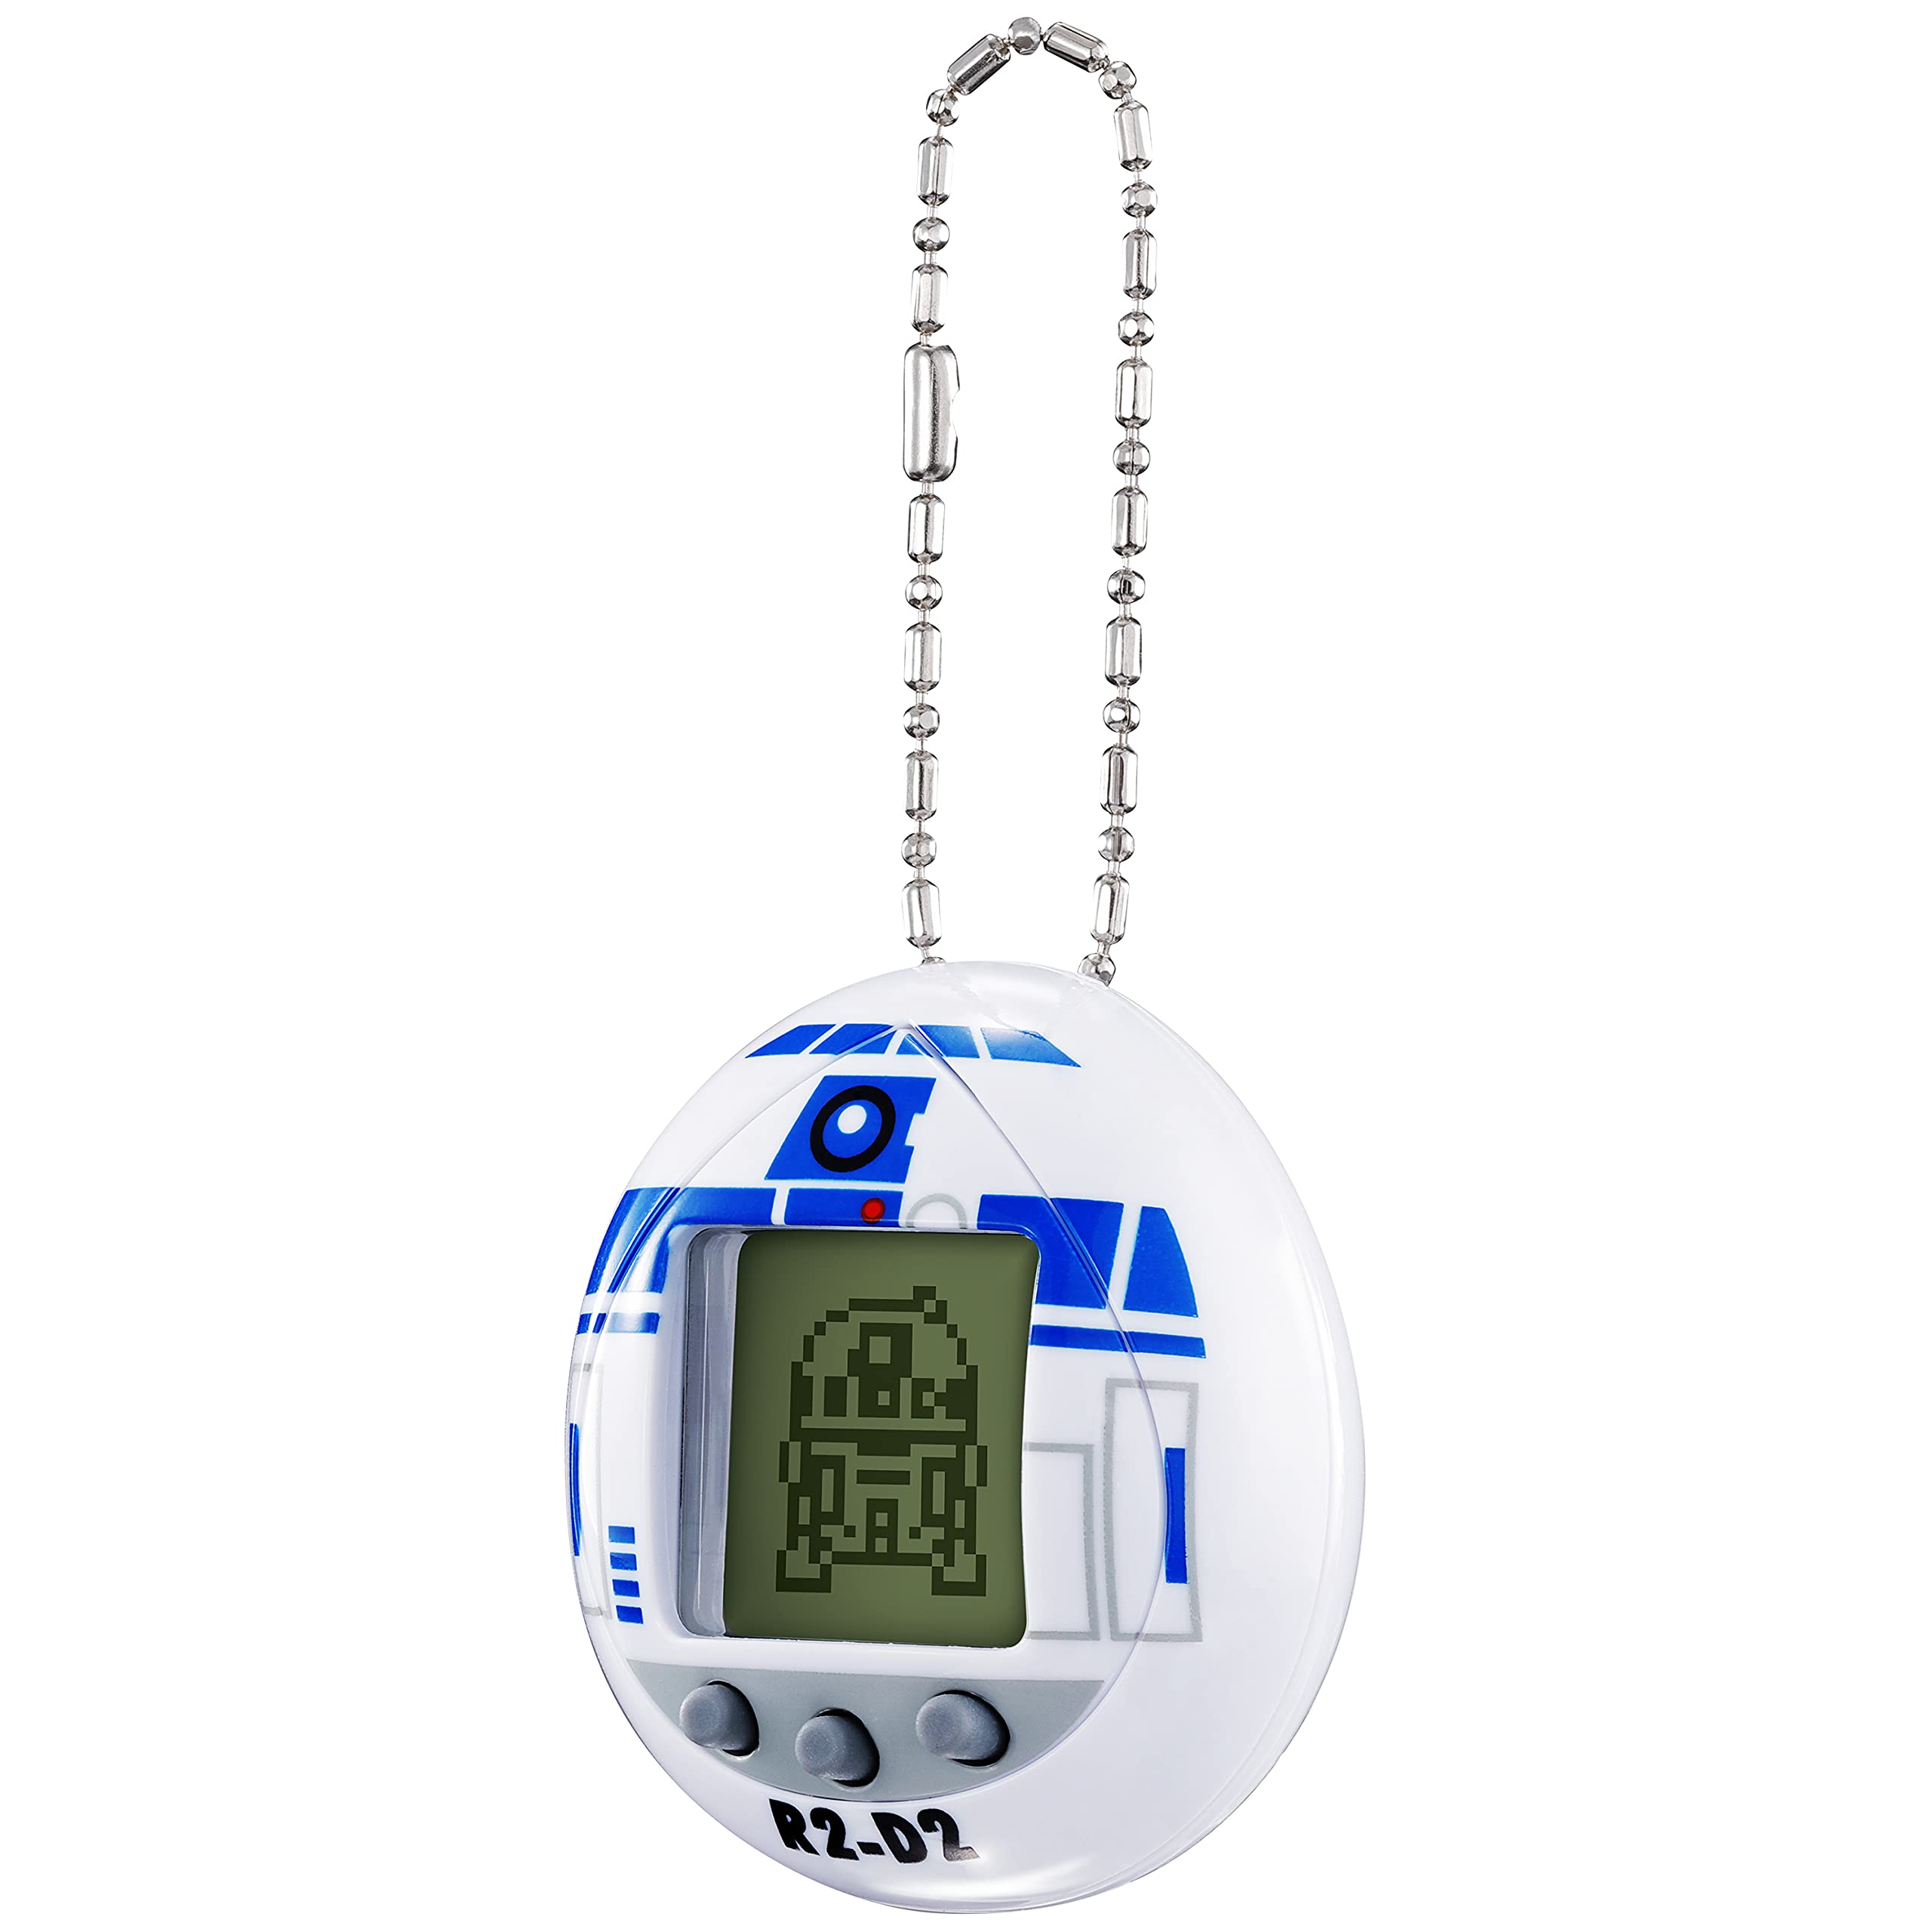 Tamagotchi nano x Star Wars - R2-D2, Classic